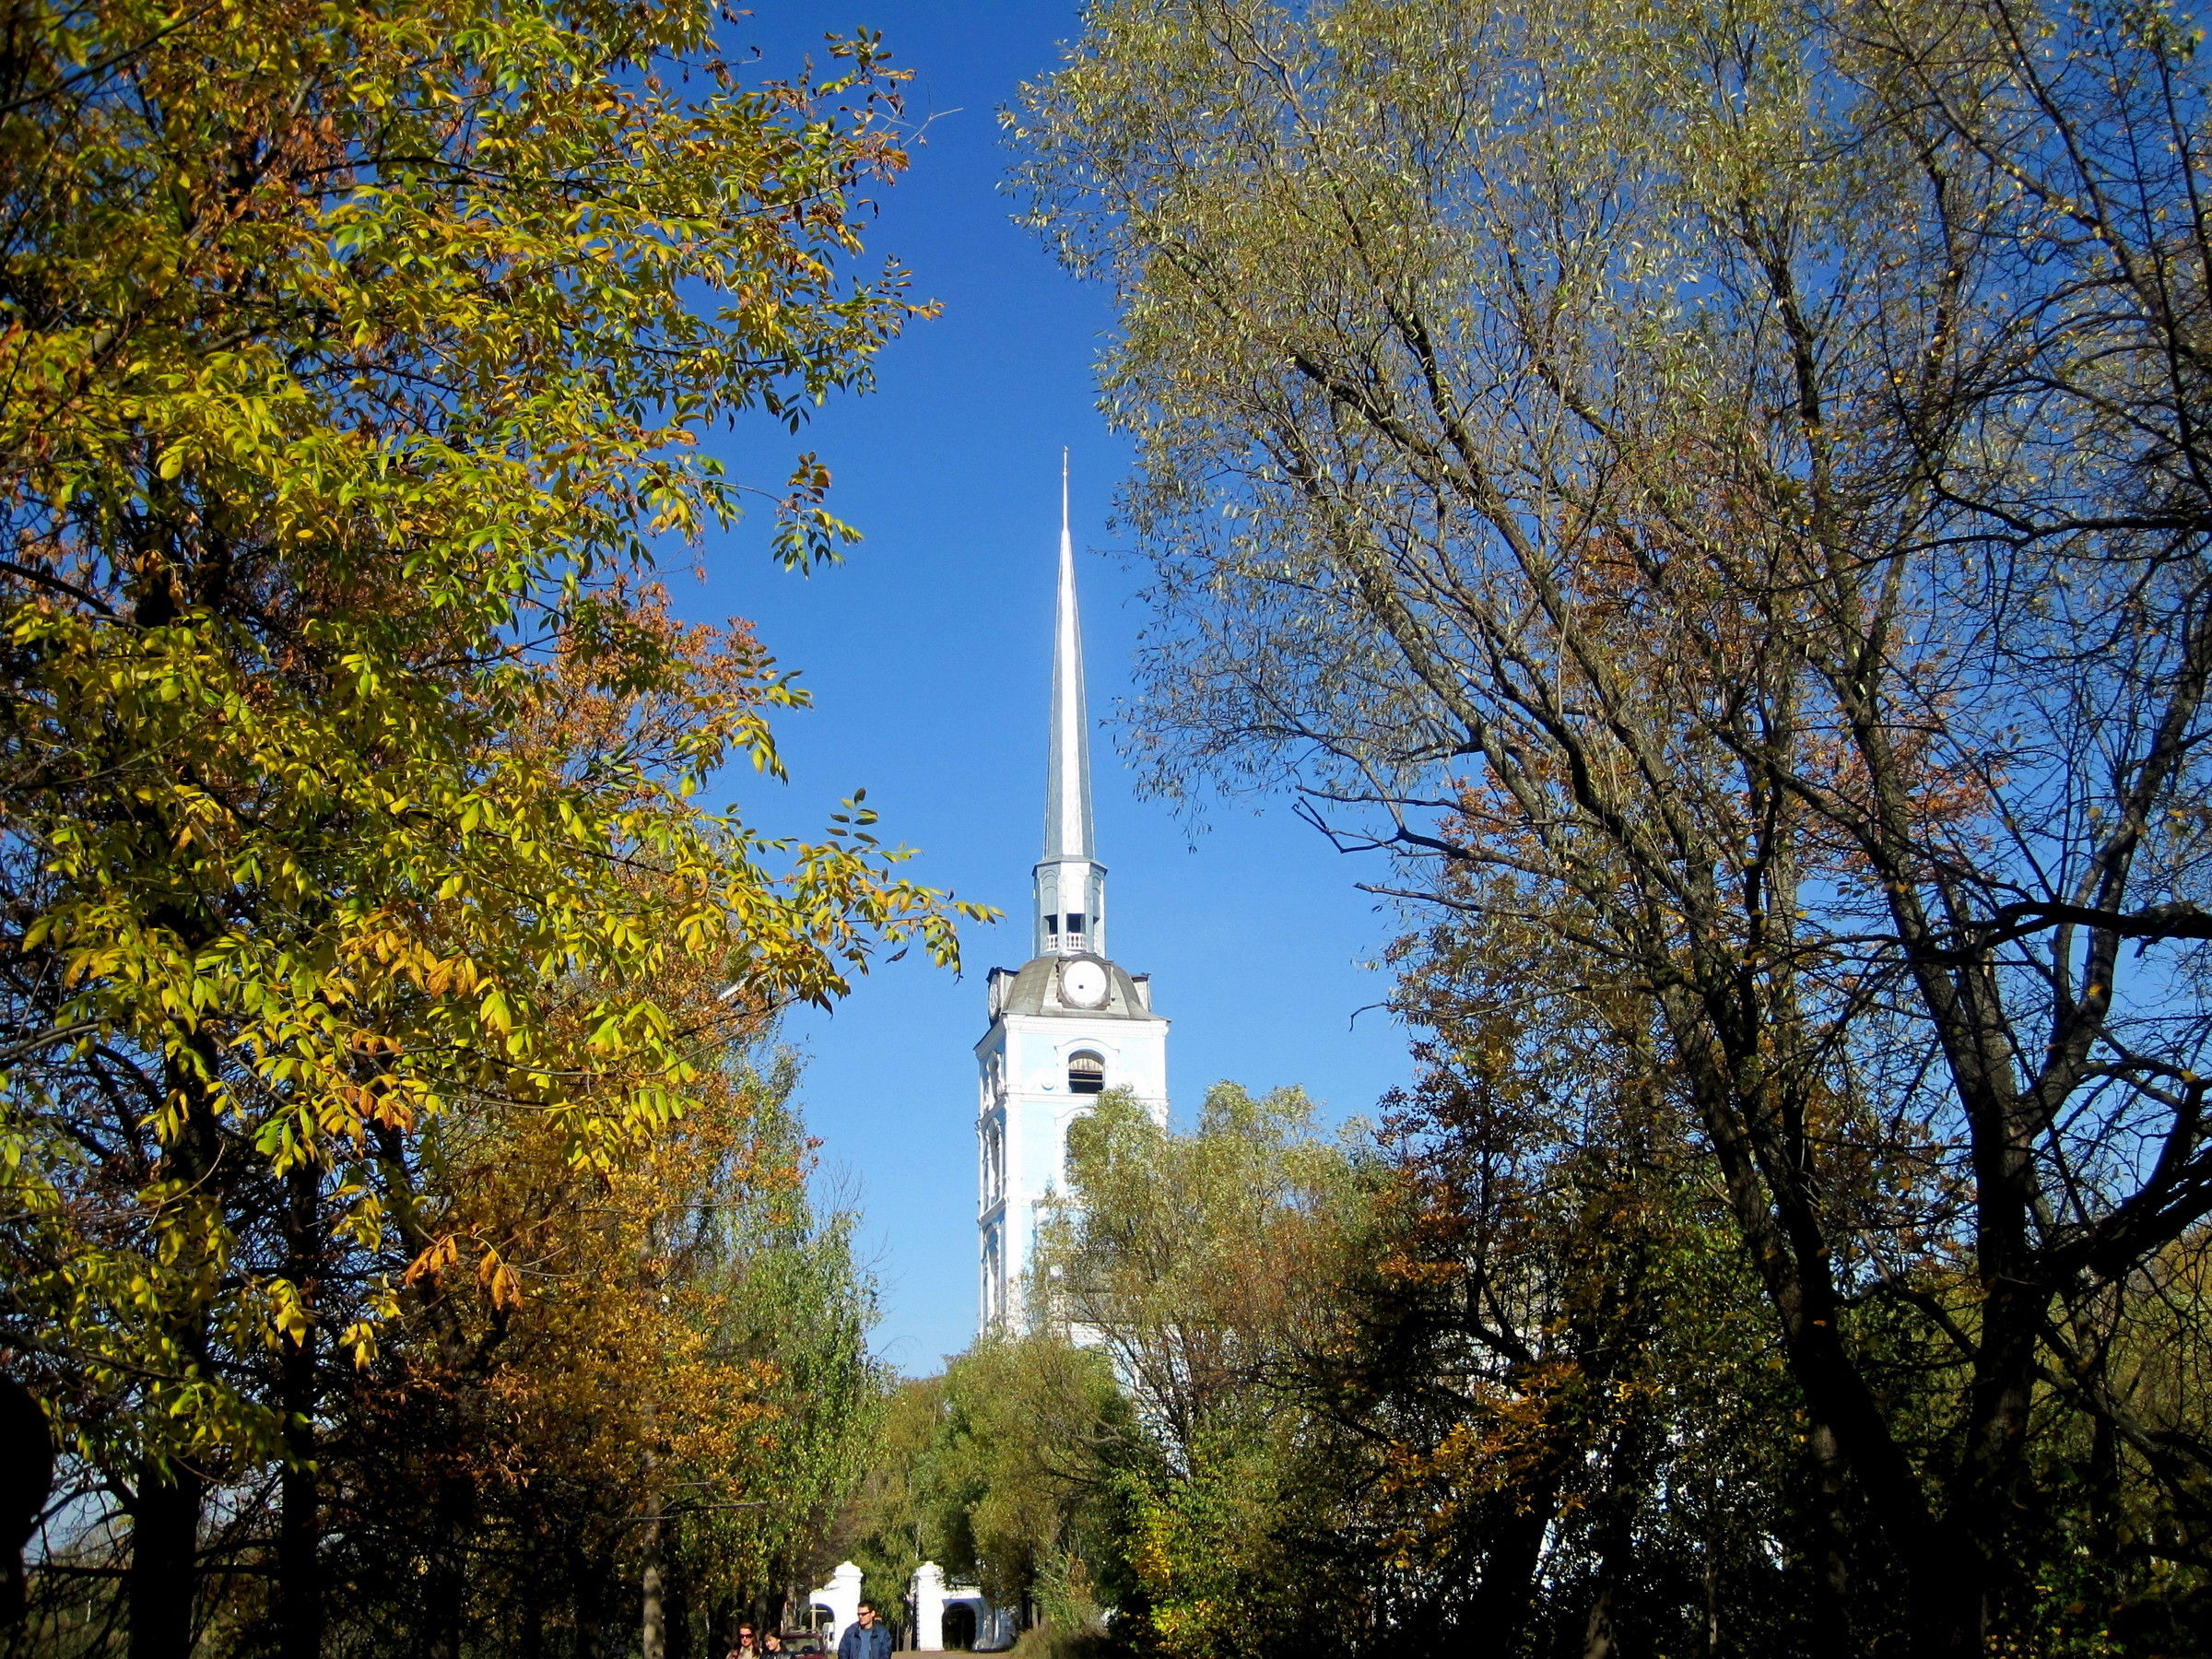 Петропавловский парк ярославль